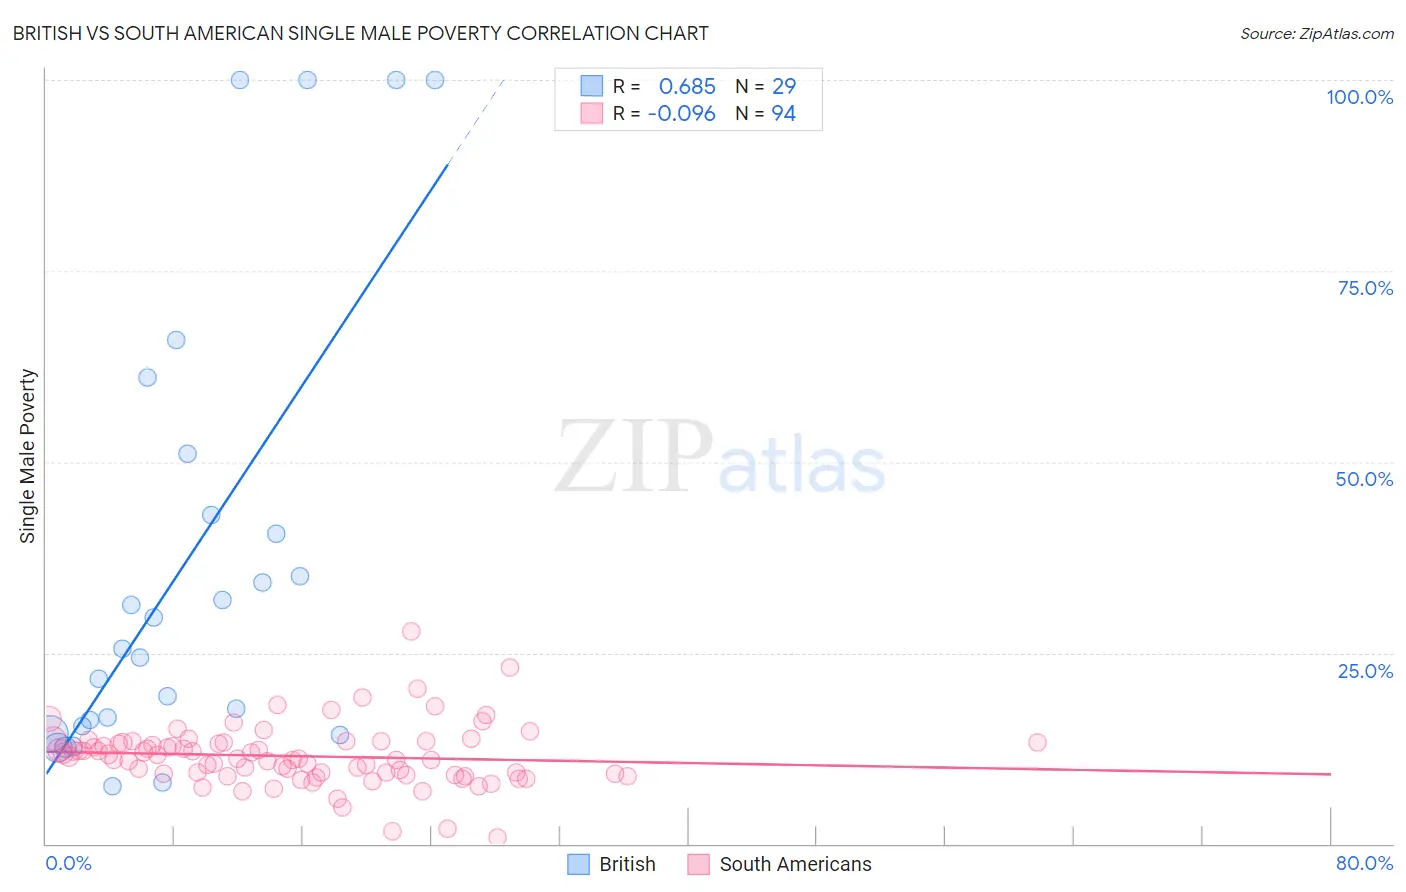 British vs South American Single Male Poverty